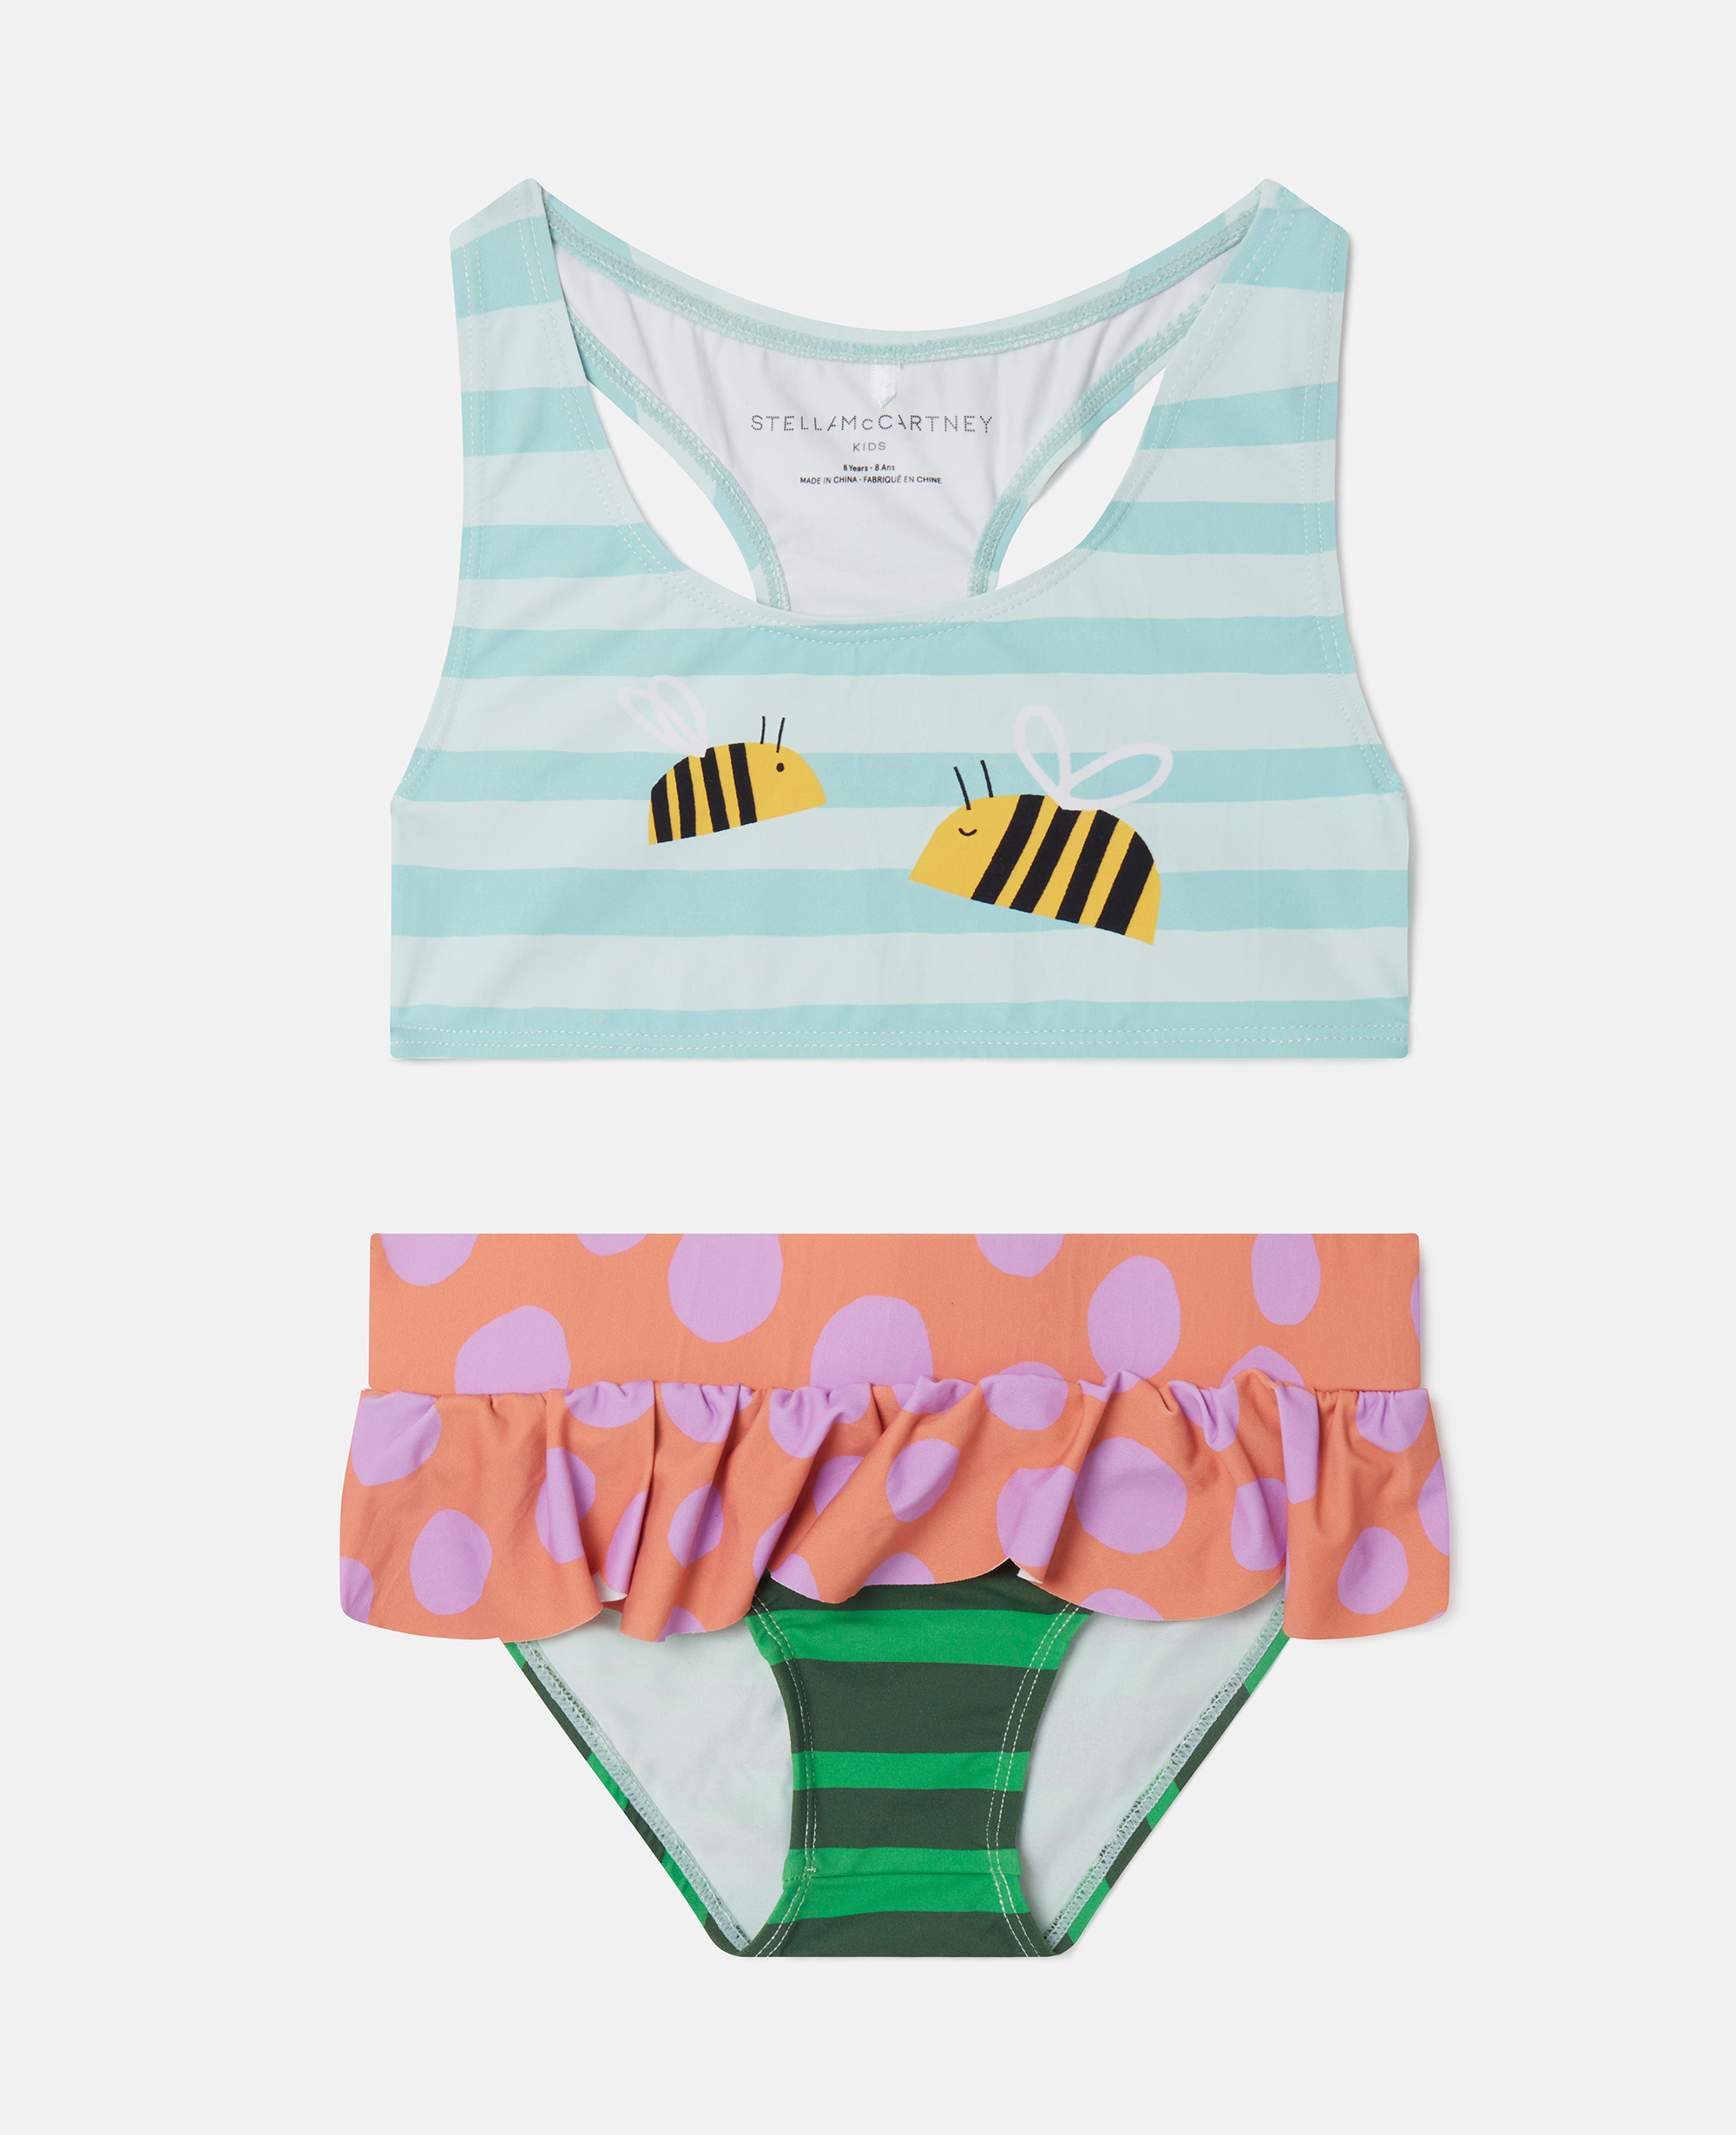 stella mccartney - bumblebee landscape print bikini set, femme, multicolour, taille: 3